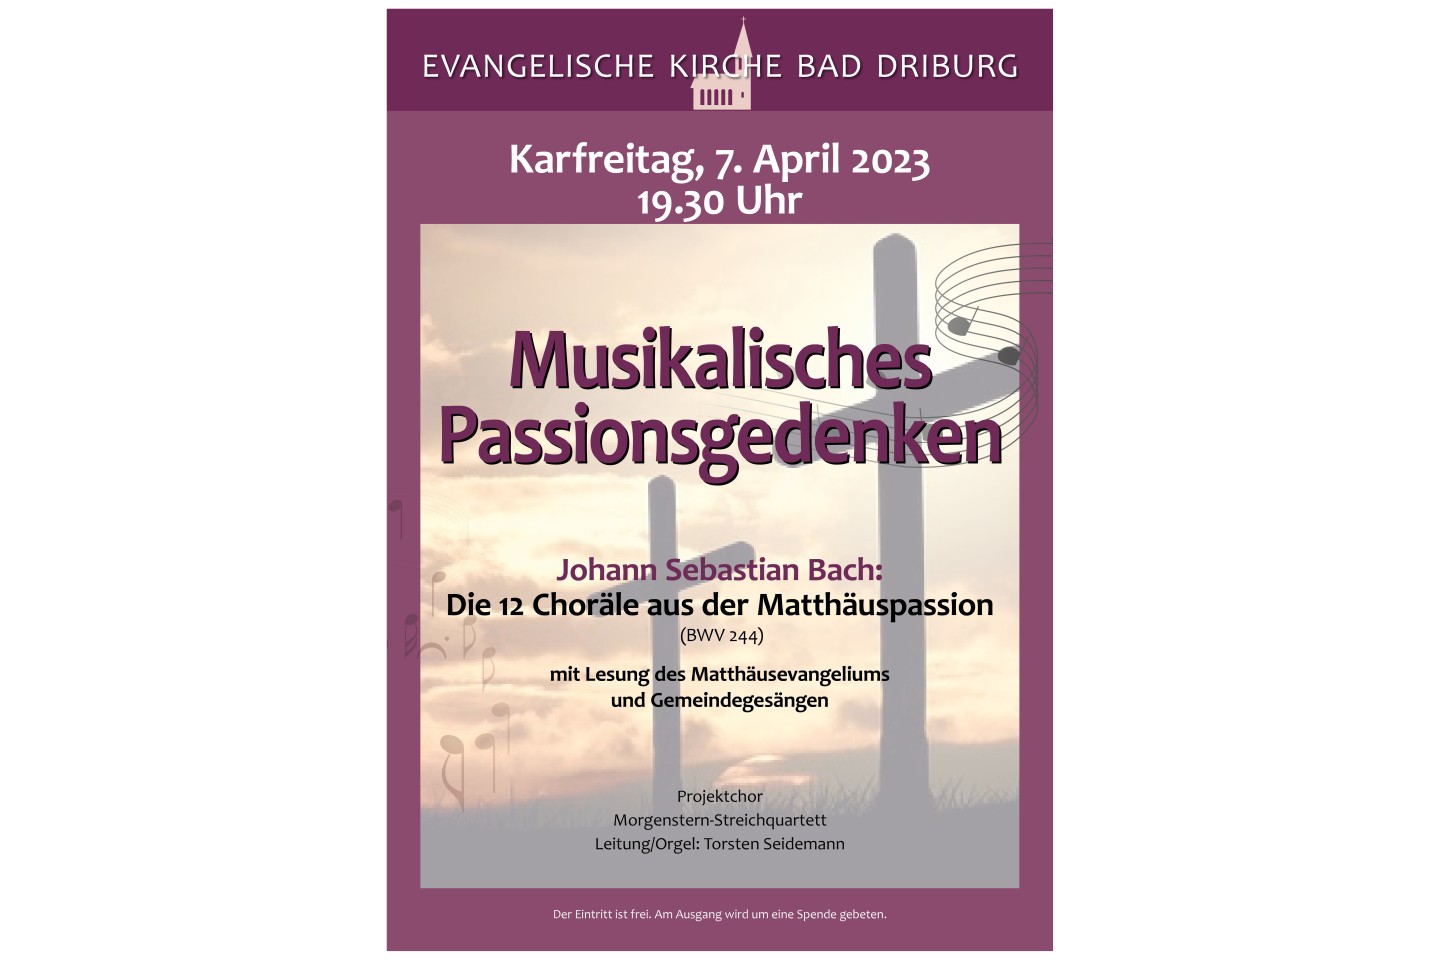 Choräle aus Bachs Matthäuspassion am Karfreitag